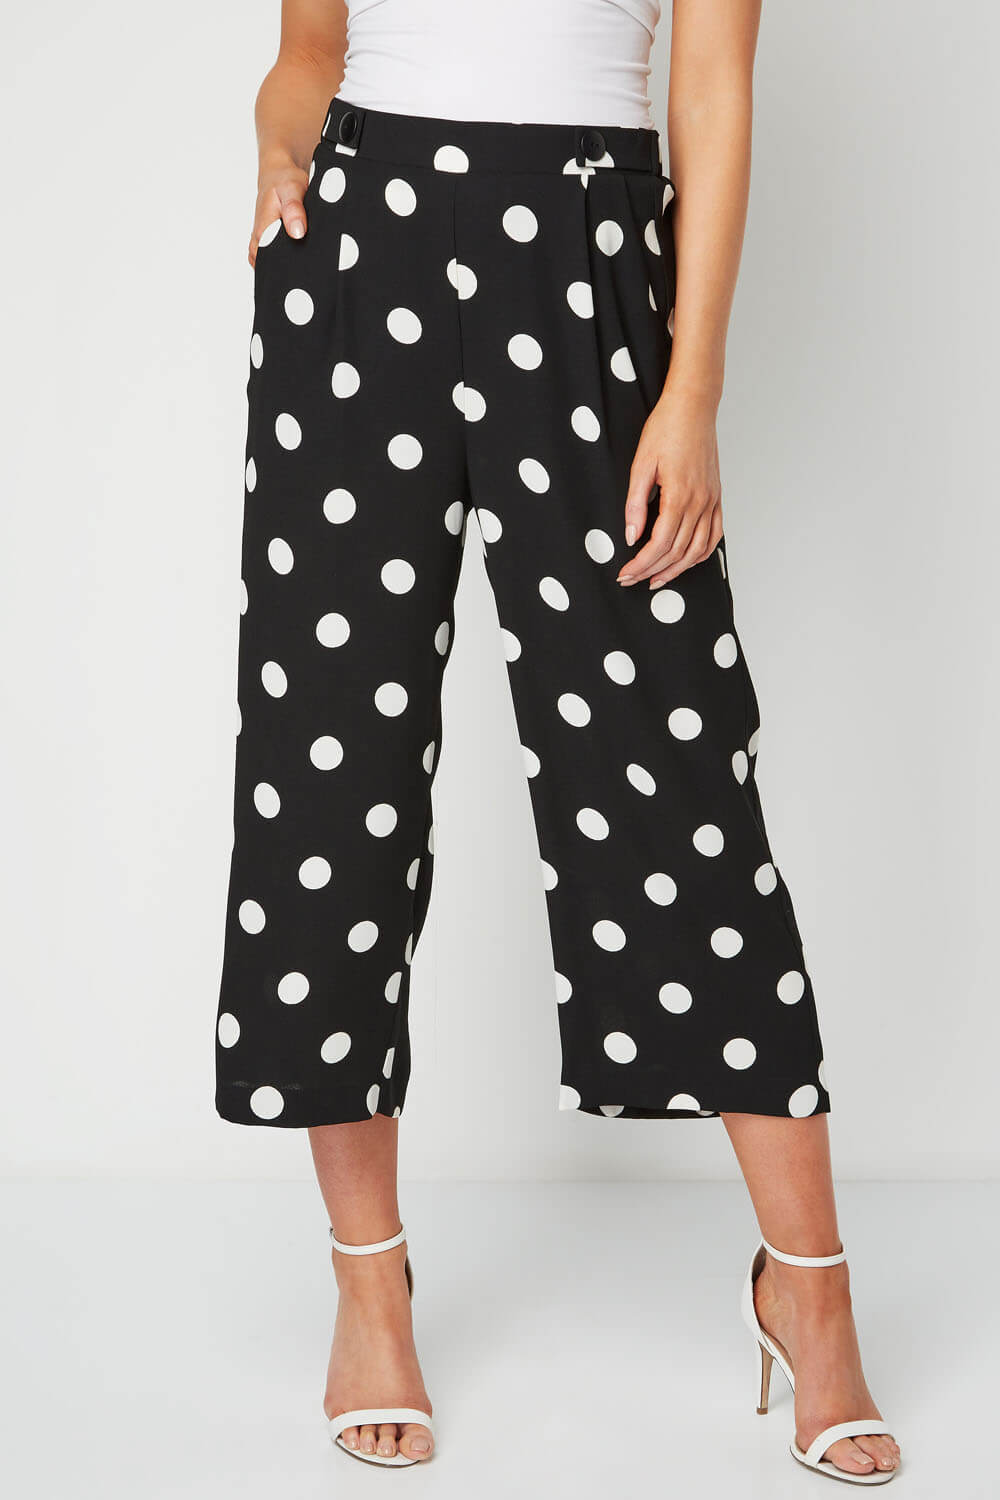 Black Polka Dot Culotte Trousers, Image 2 of 5